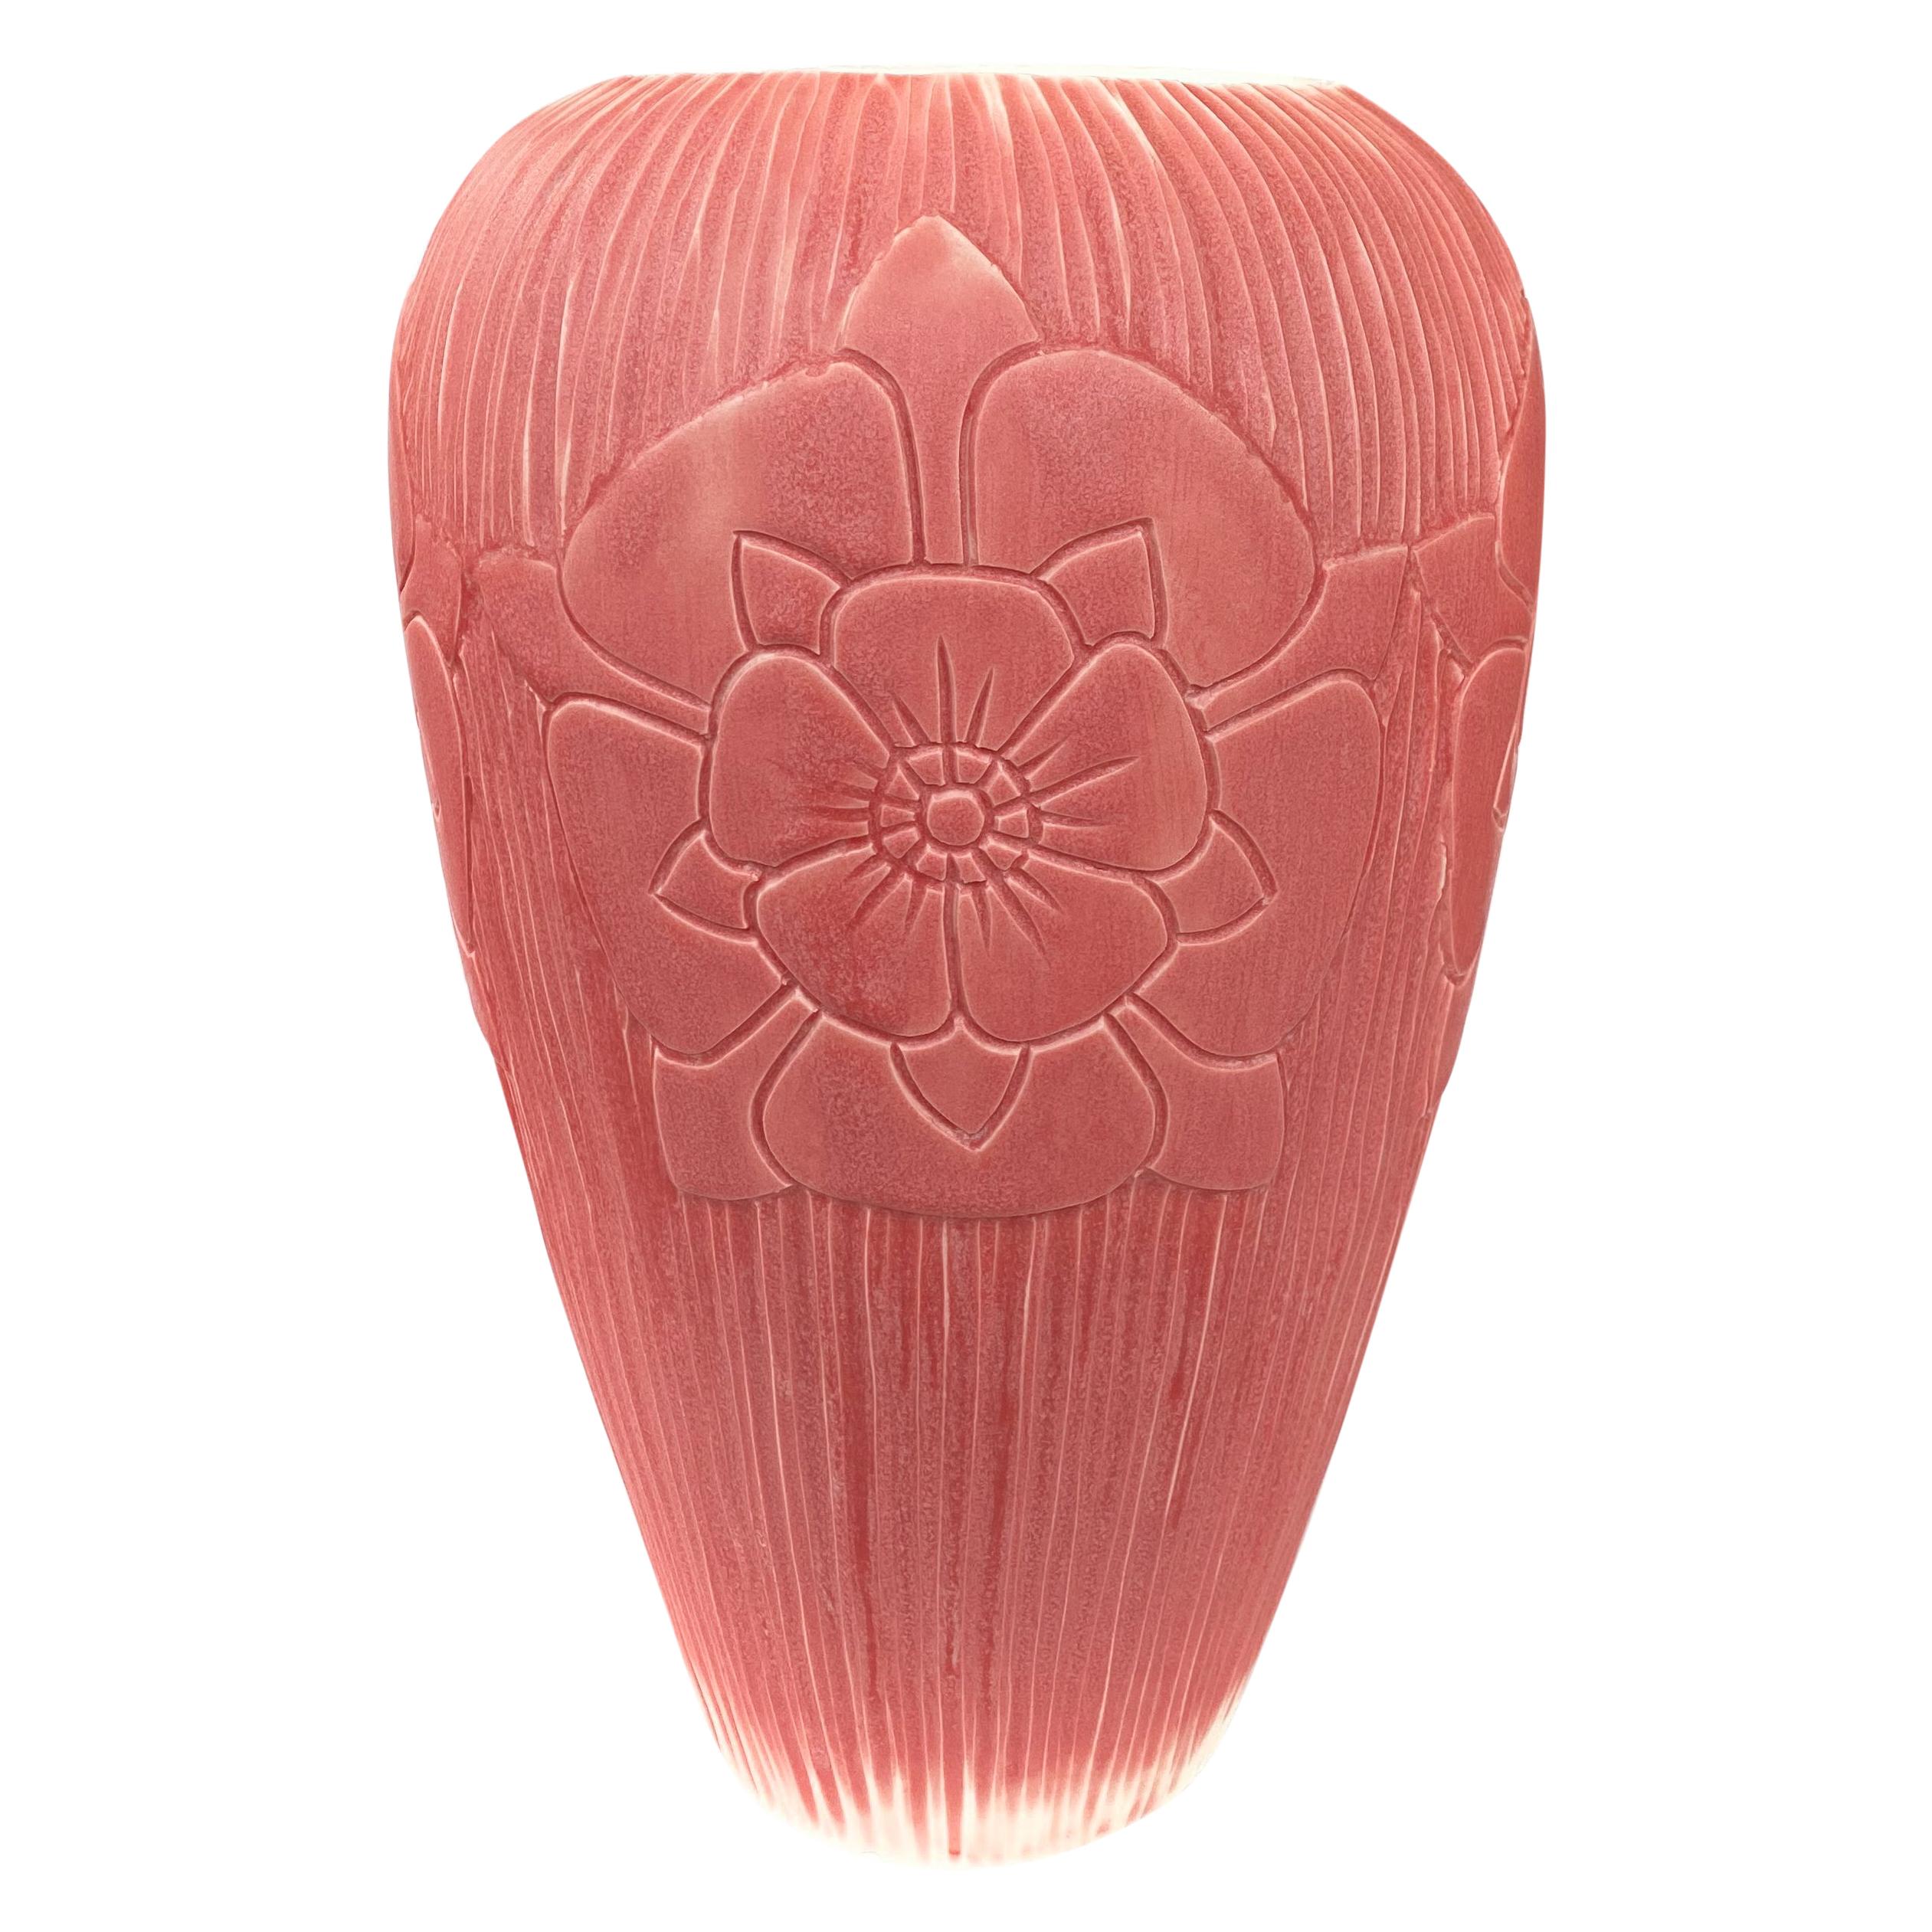 Ruby "English Rose" Hand Carved Porcelain Arts & Crafts Pottery Vase